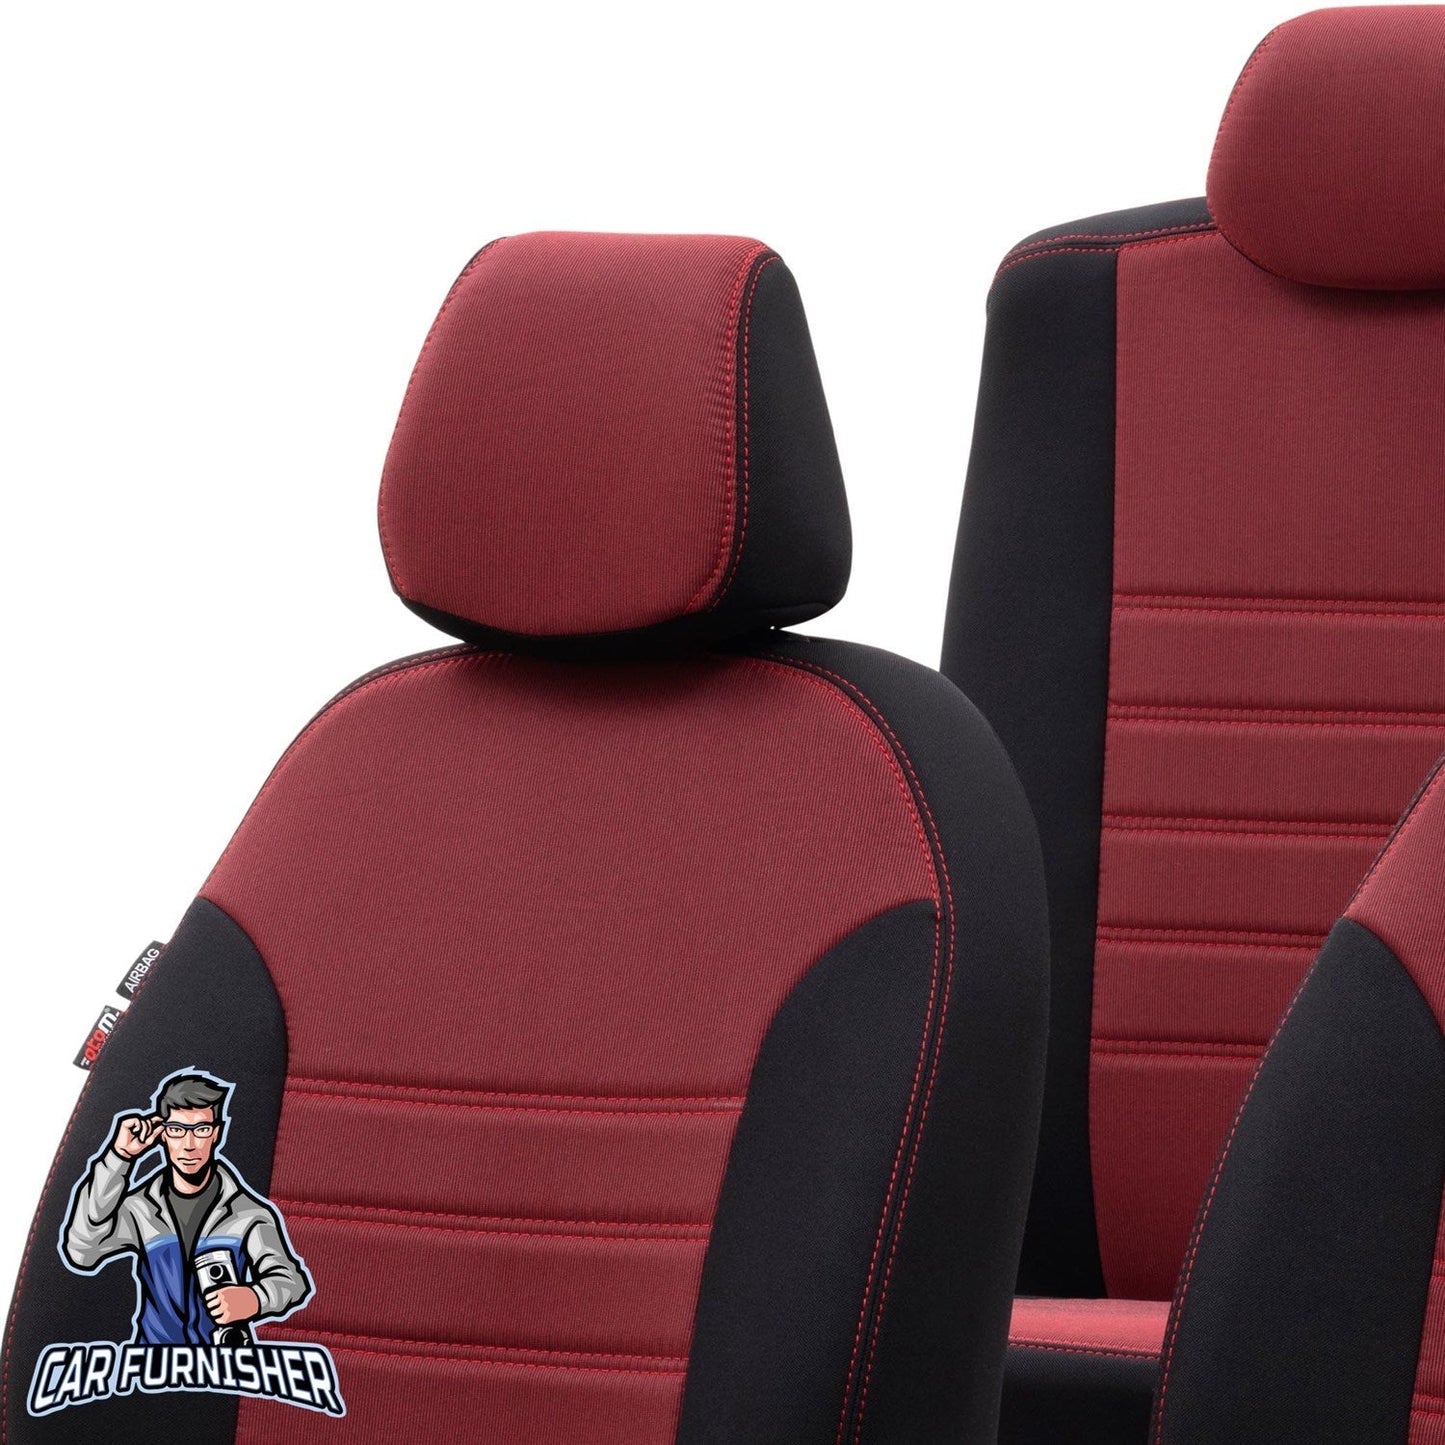 Peugeot 407 Seat Covers Original Jacquard Design Red Jacquard Fabric